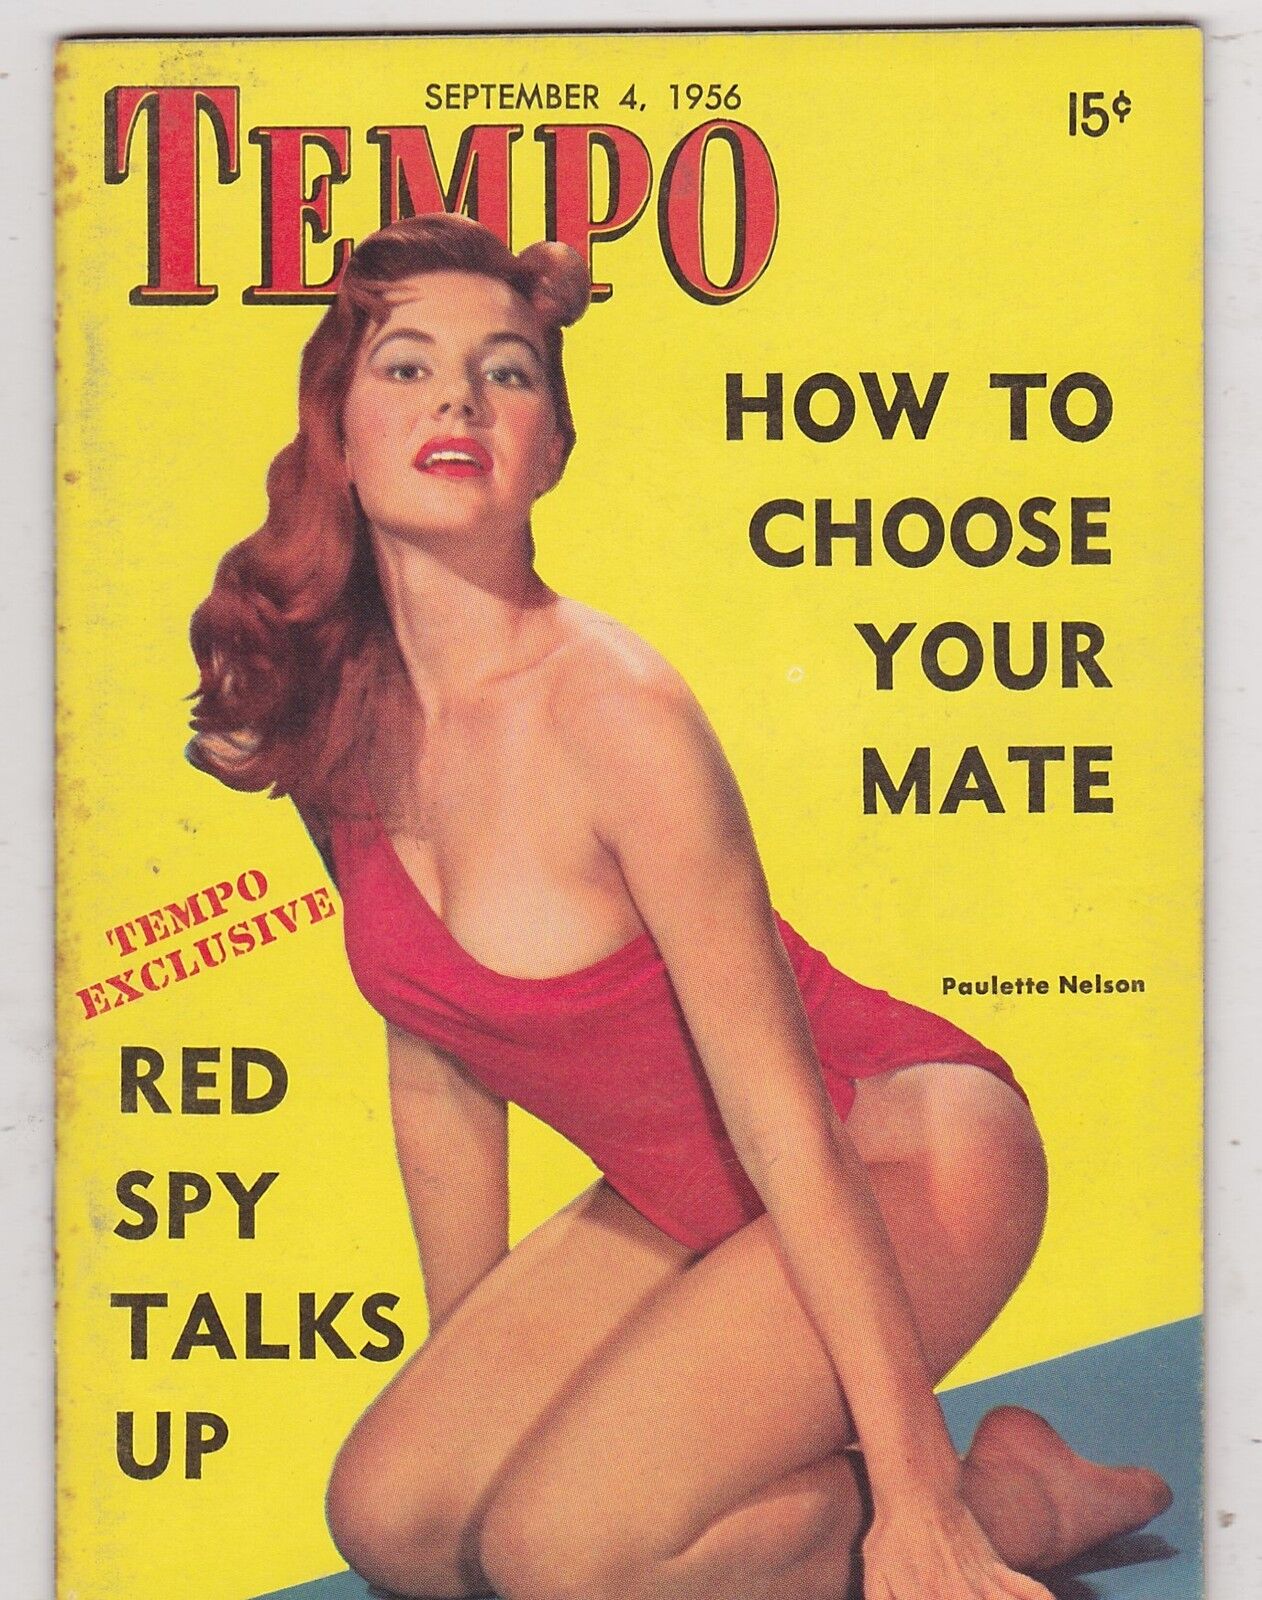 (UNREAD) Cheesecake pinup digest magazine #700 - SEPT 4 1956 - TEMPO